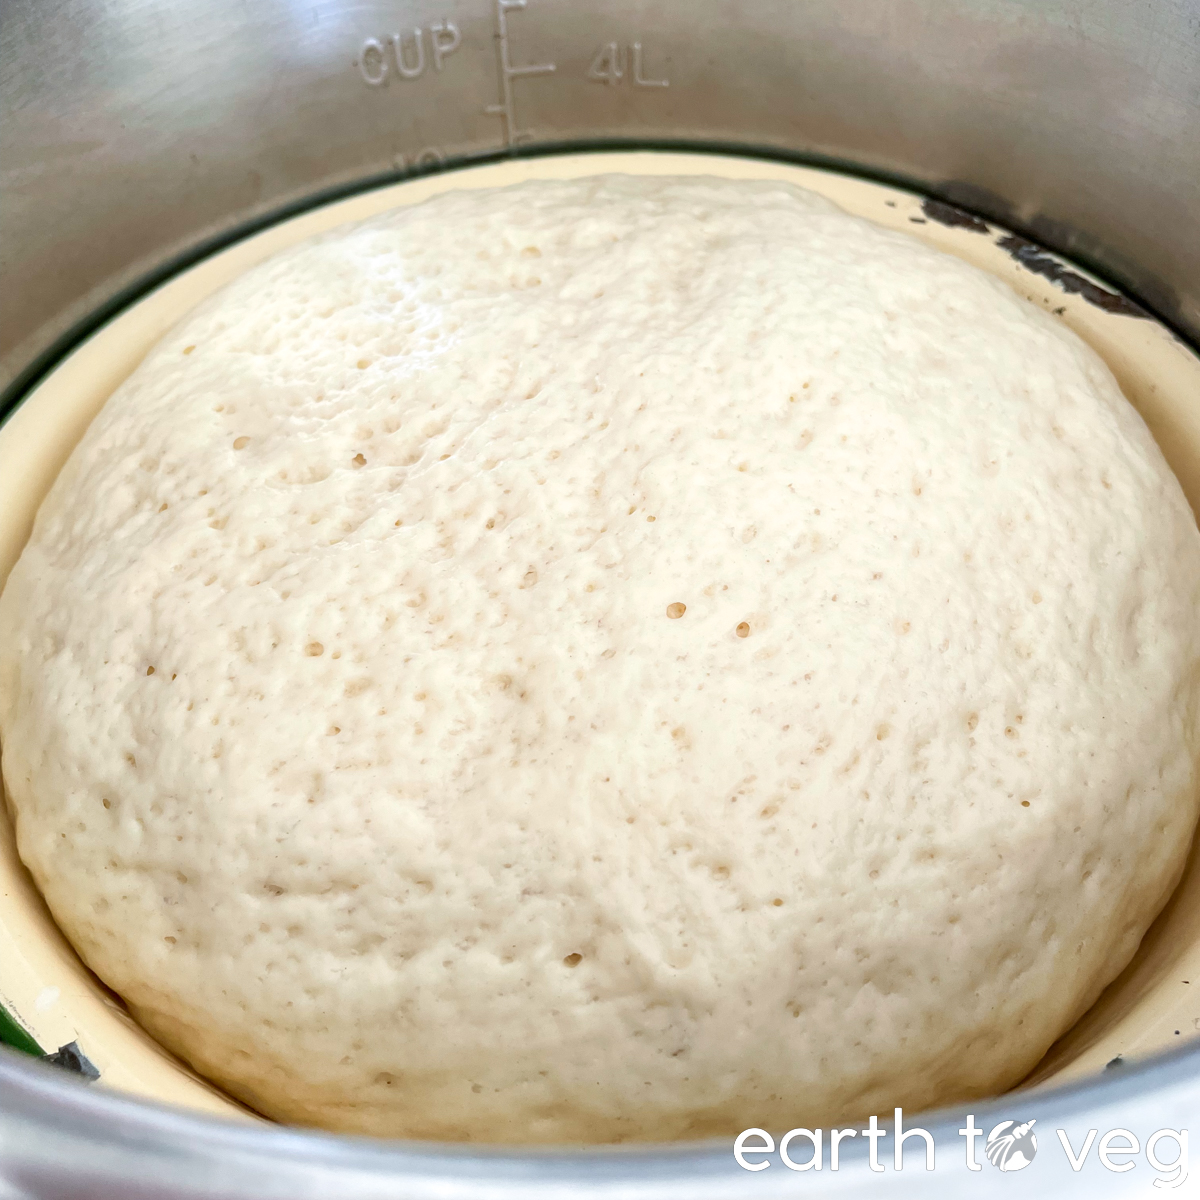 overheated dough (killed yeast)